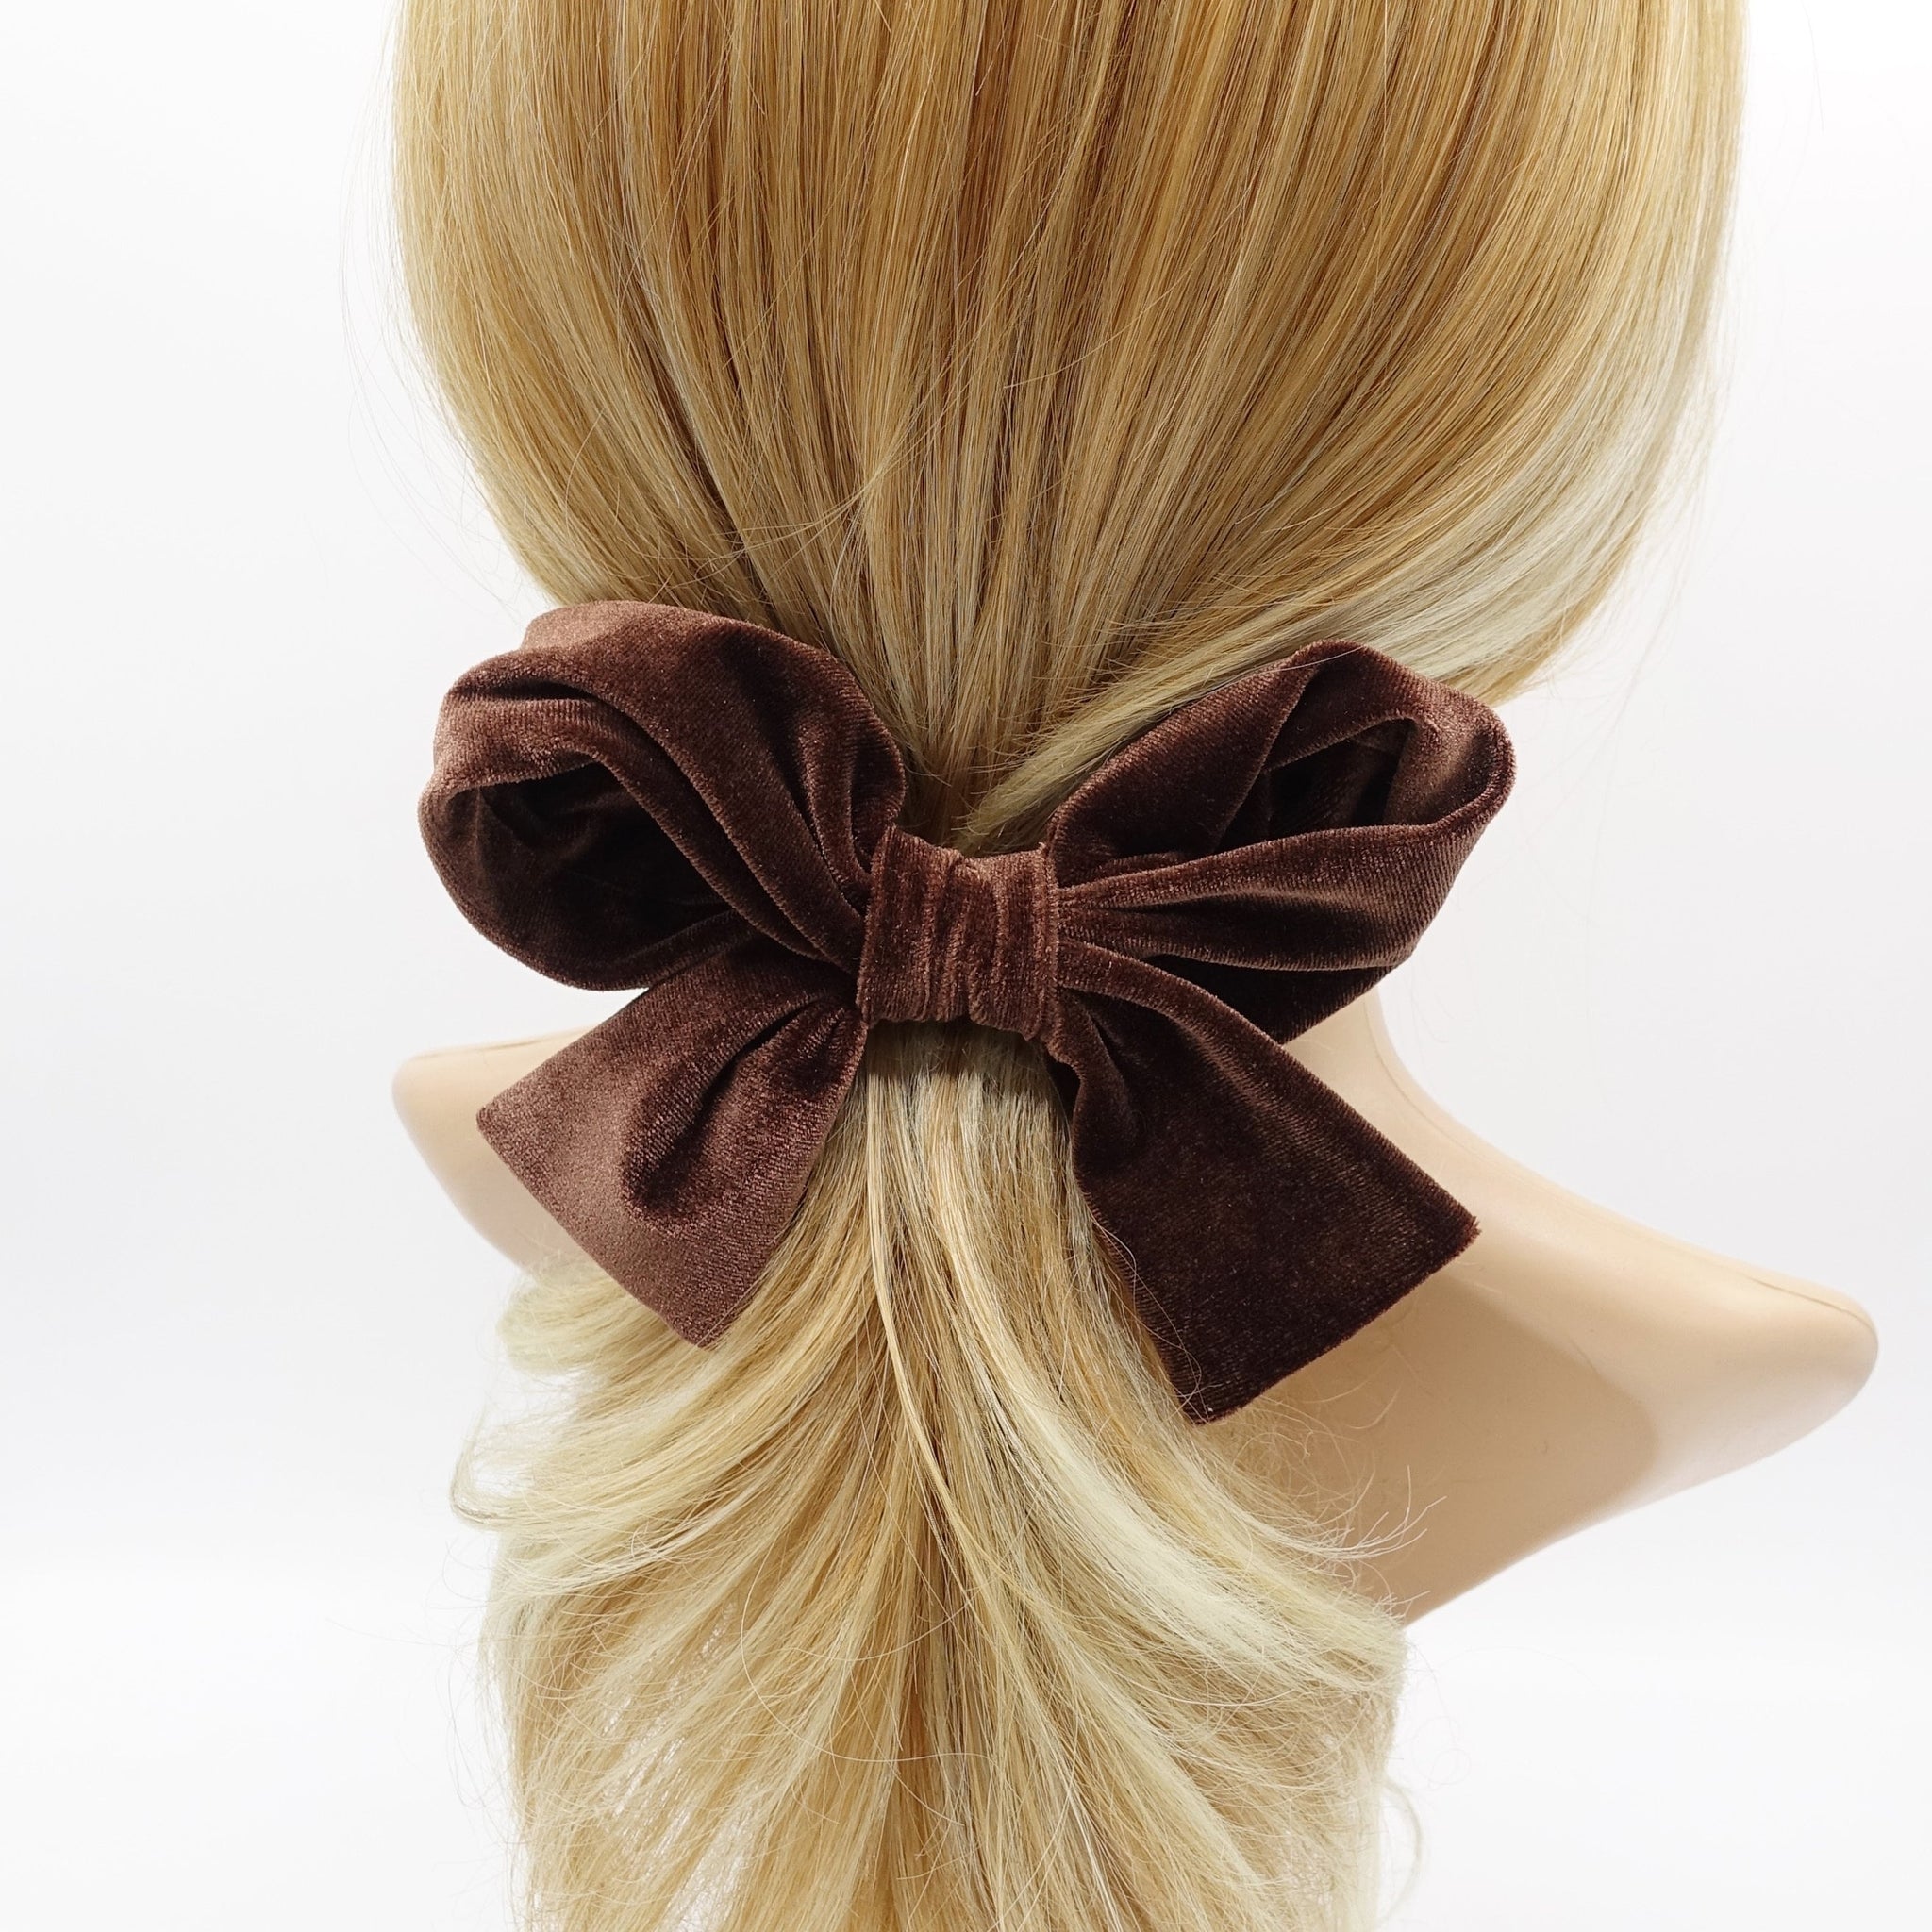 veryshine.com Barrette (Bow) Brown velvet wired bow hair accessory for women